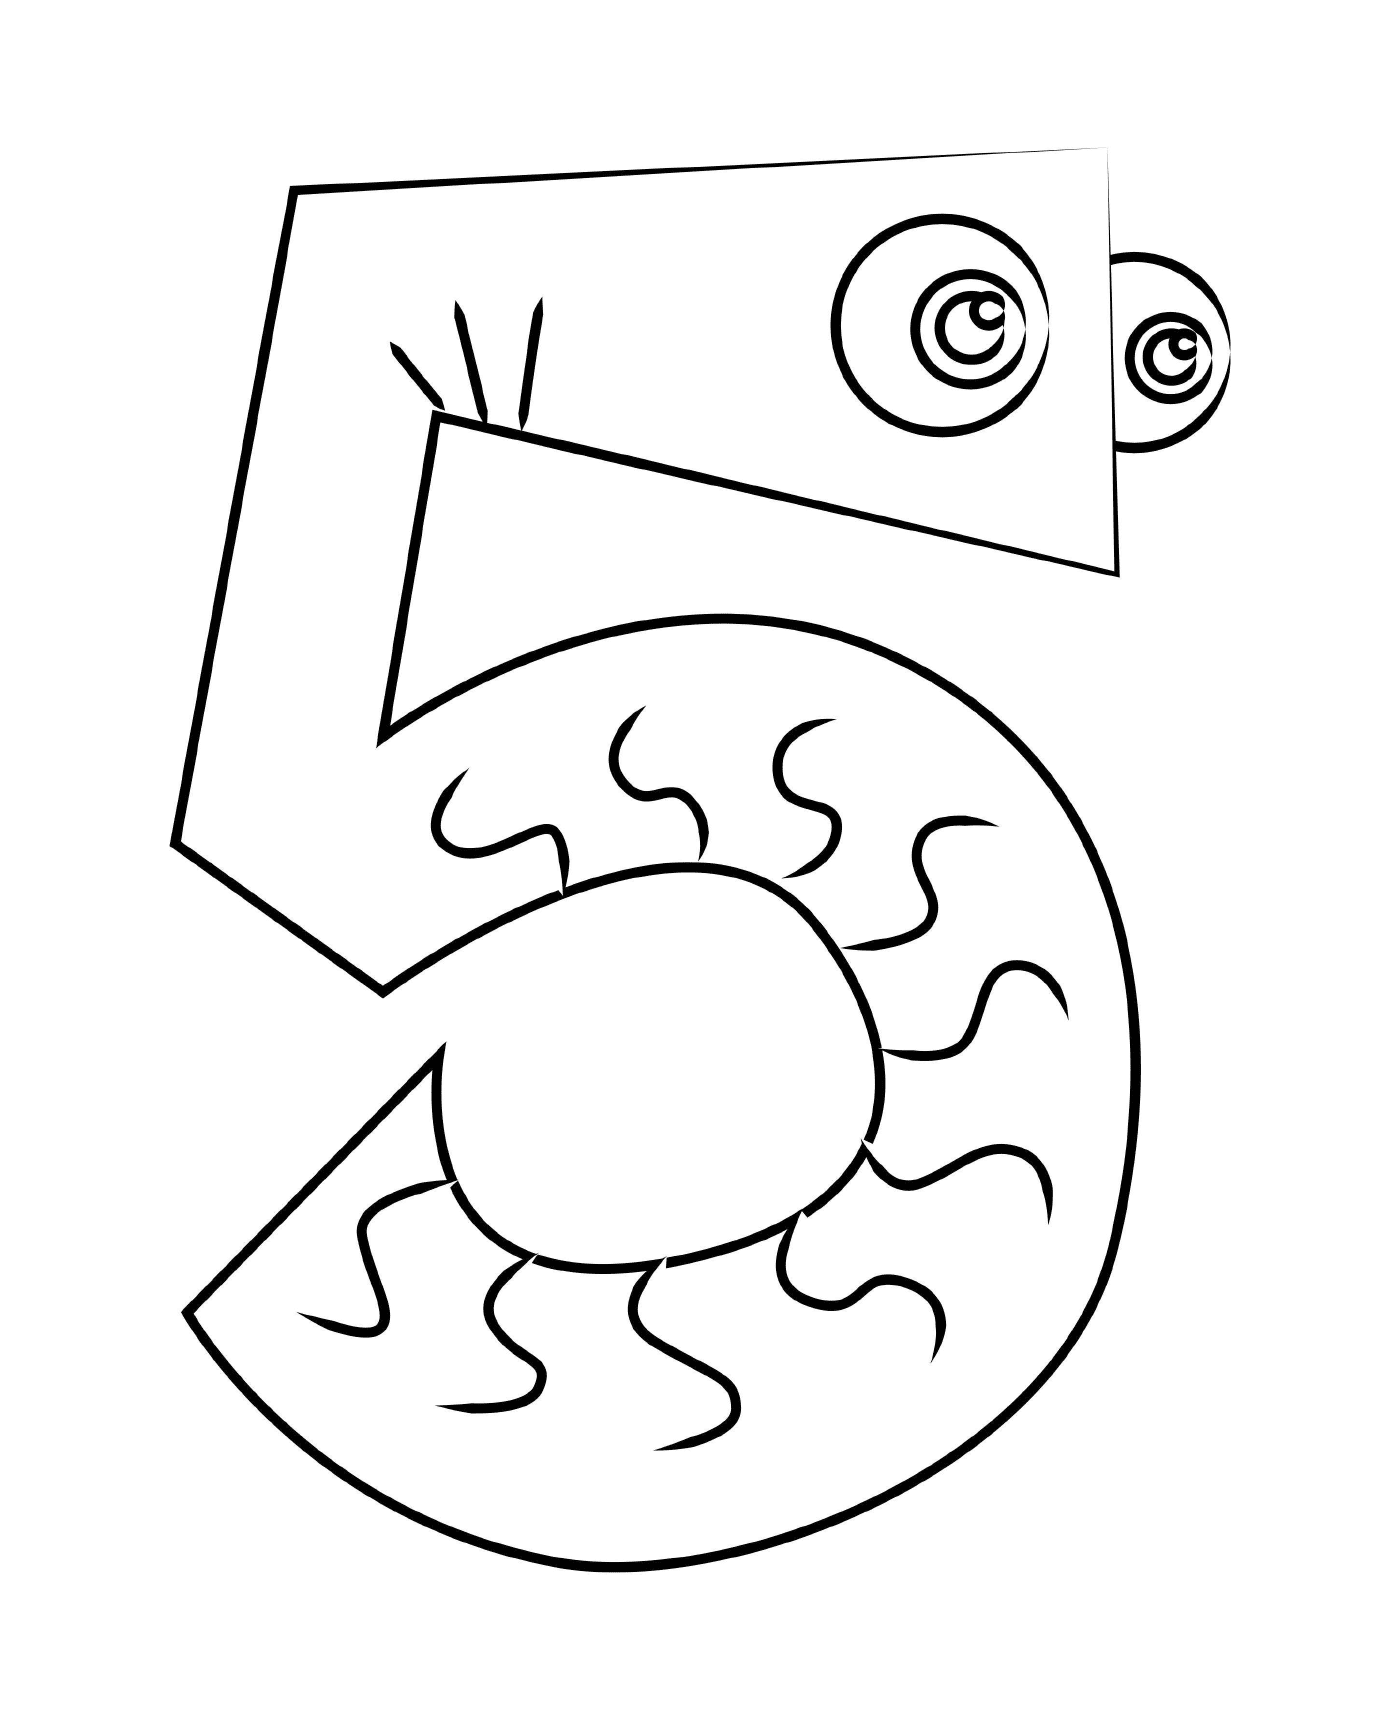  Figure five drawn 